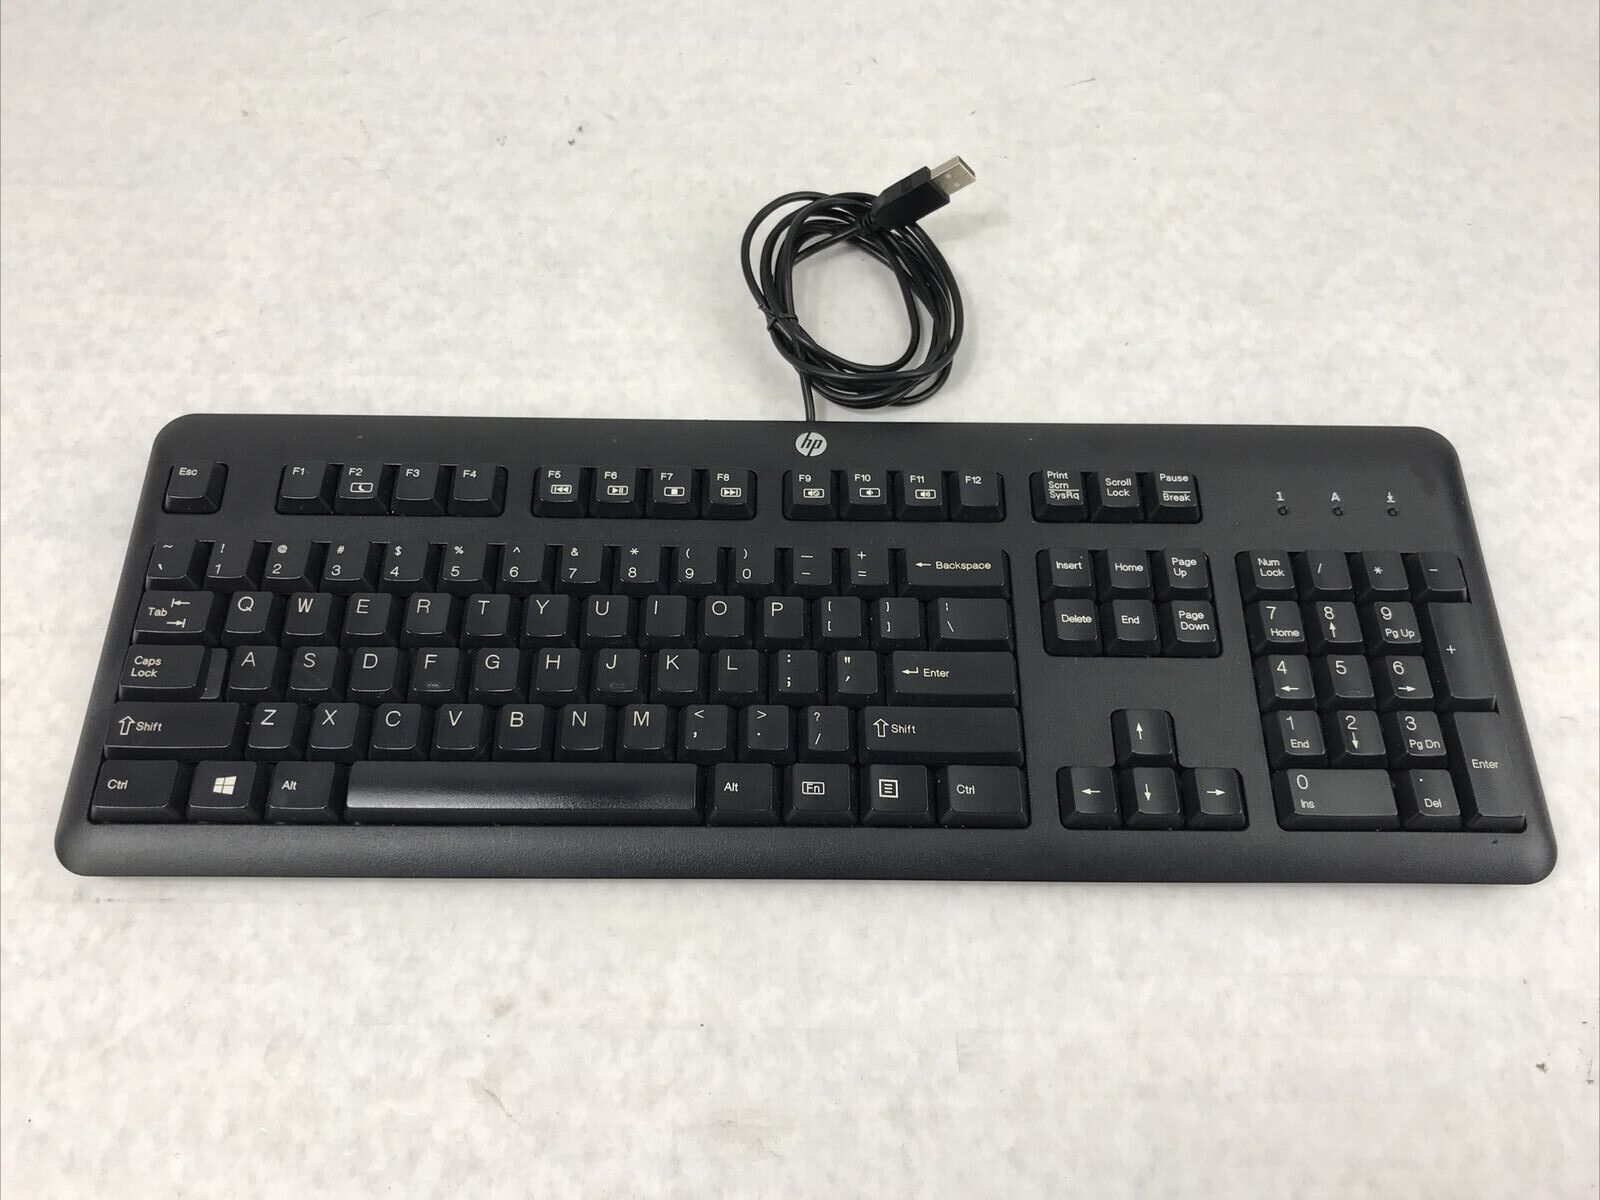 HP 672647-003 KU-1156 Black Wired Standard USB Desktop Keyboard